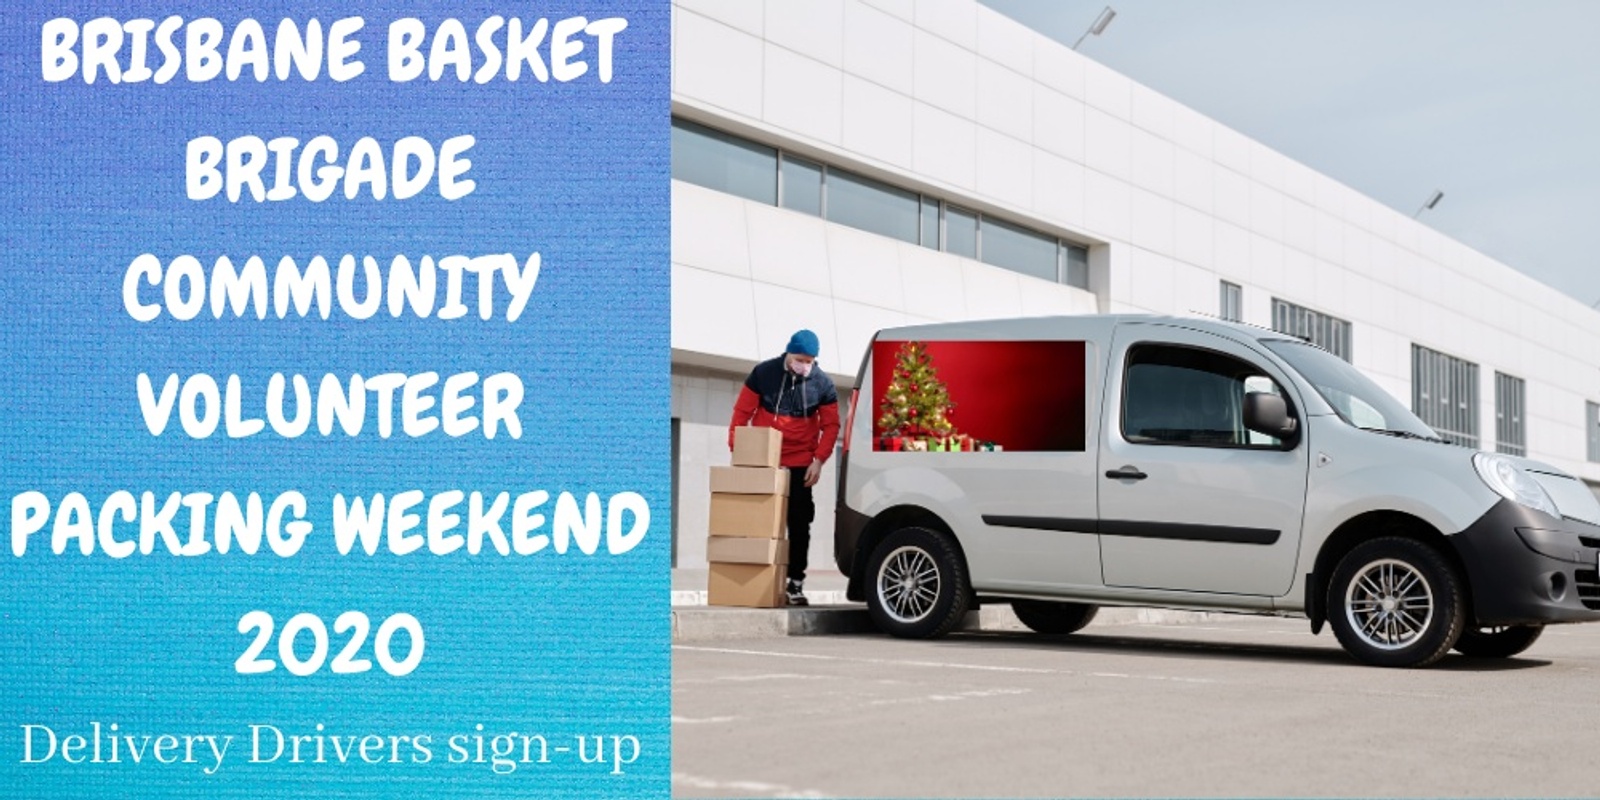 Banner image for Brisbane Basket Brigade Community Volunteer Packing Weekend 2020 DELIVERY DRIVERS